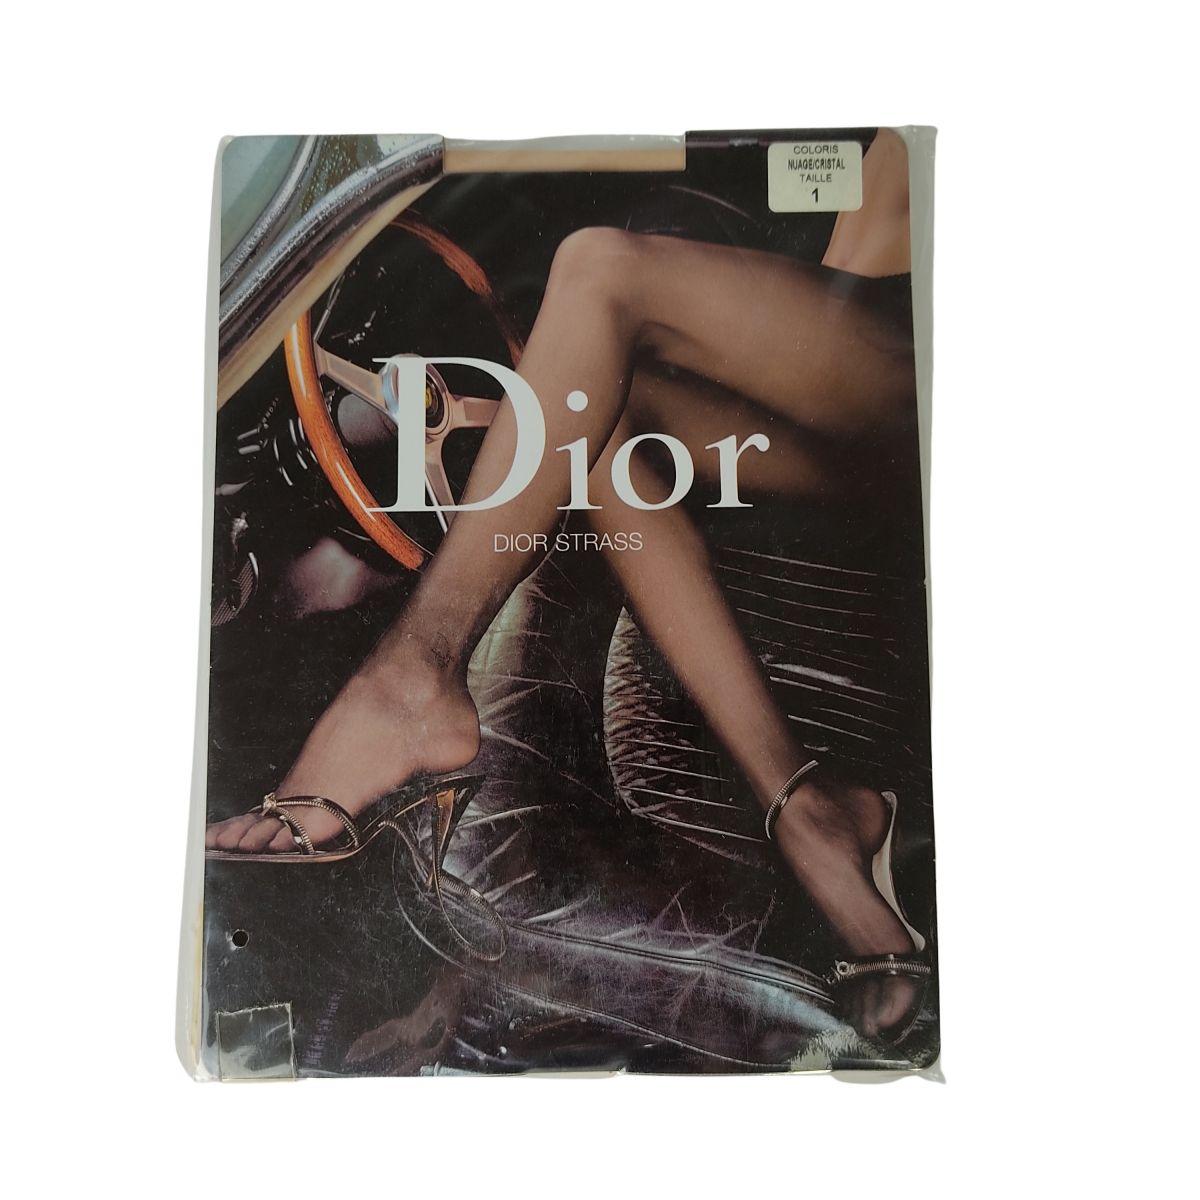 Dior nude nylon tights with rhinestones (Size 1)